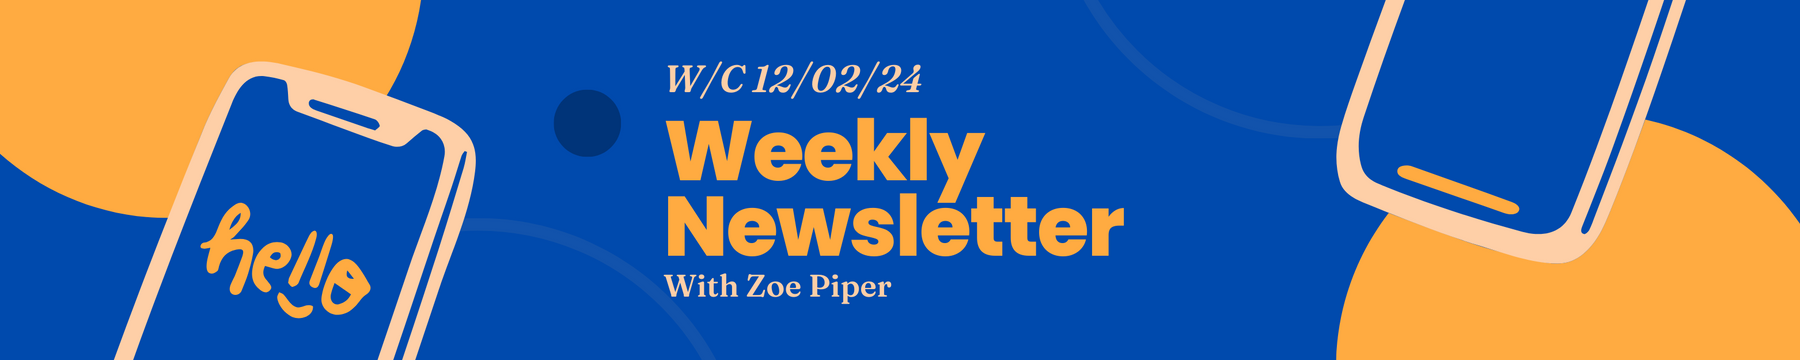 Weekly Newsletter W/C 12/02/24